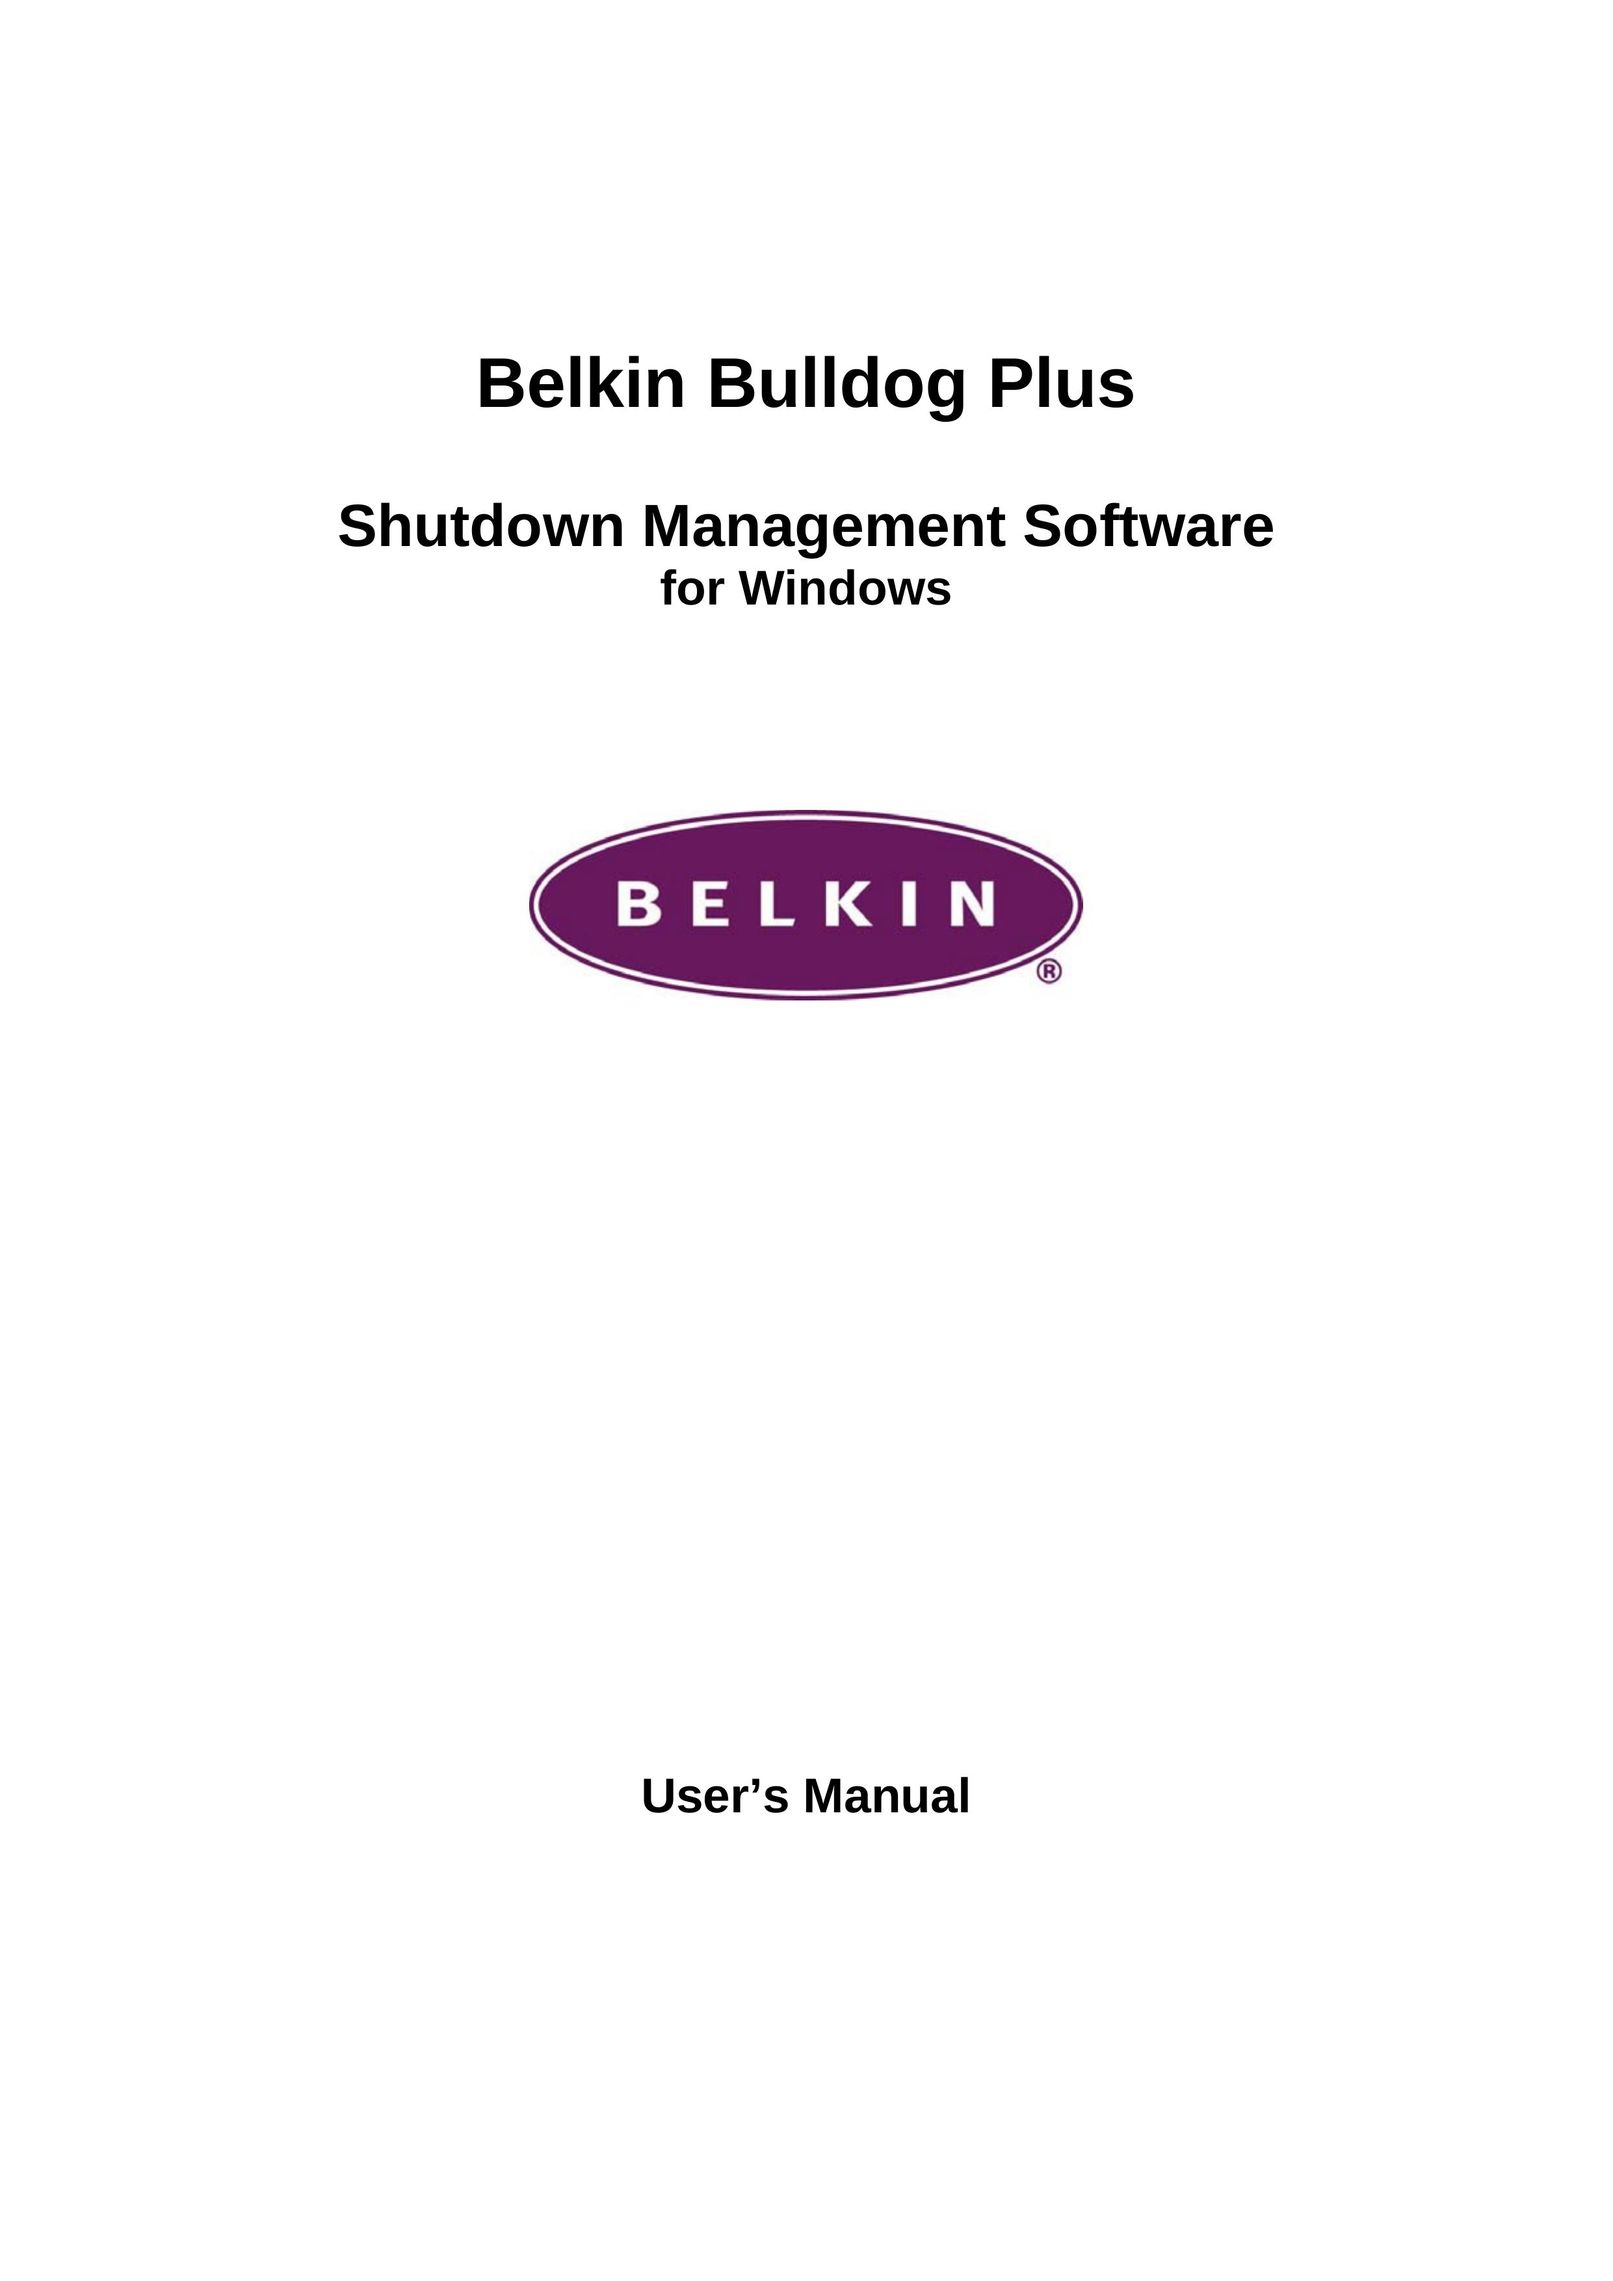 Belkin belkin bulldog plus- shutdown management software for windows Frozen Dessert Maker User Manual